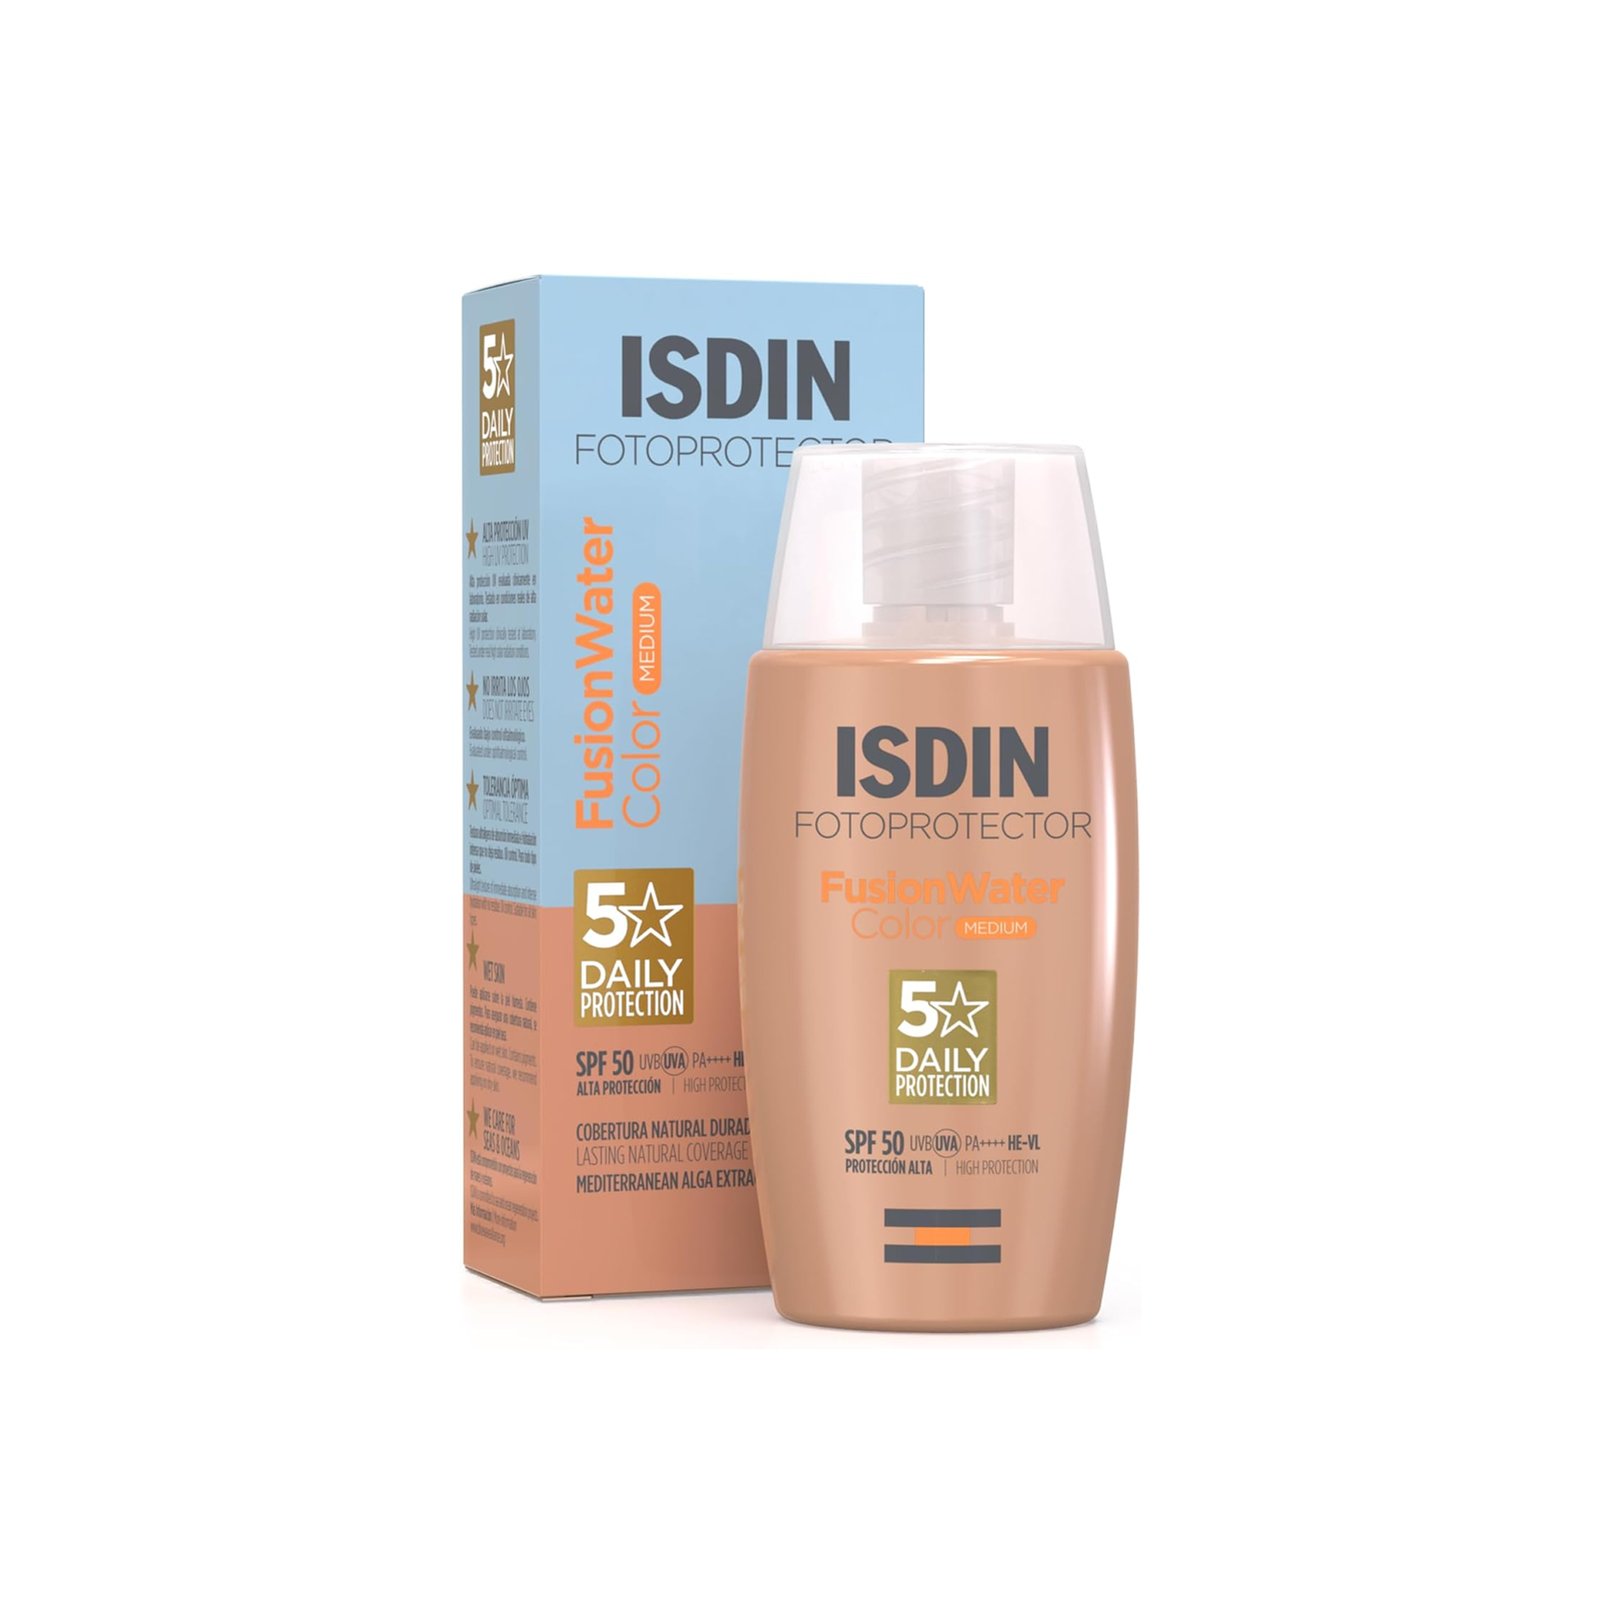 ISDIN Fotoprotector Fusion Water Color Medium SPF50 50ml (1.69floz)